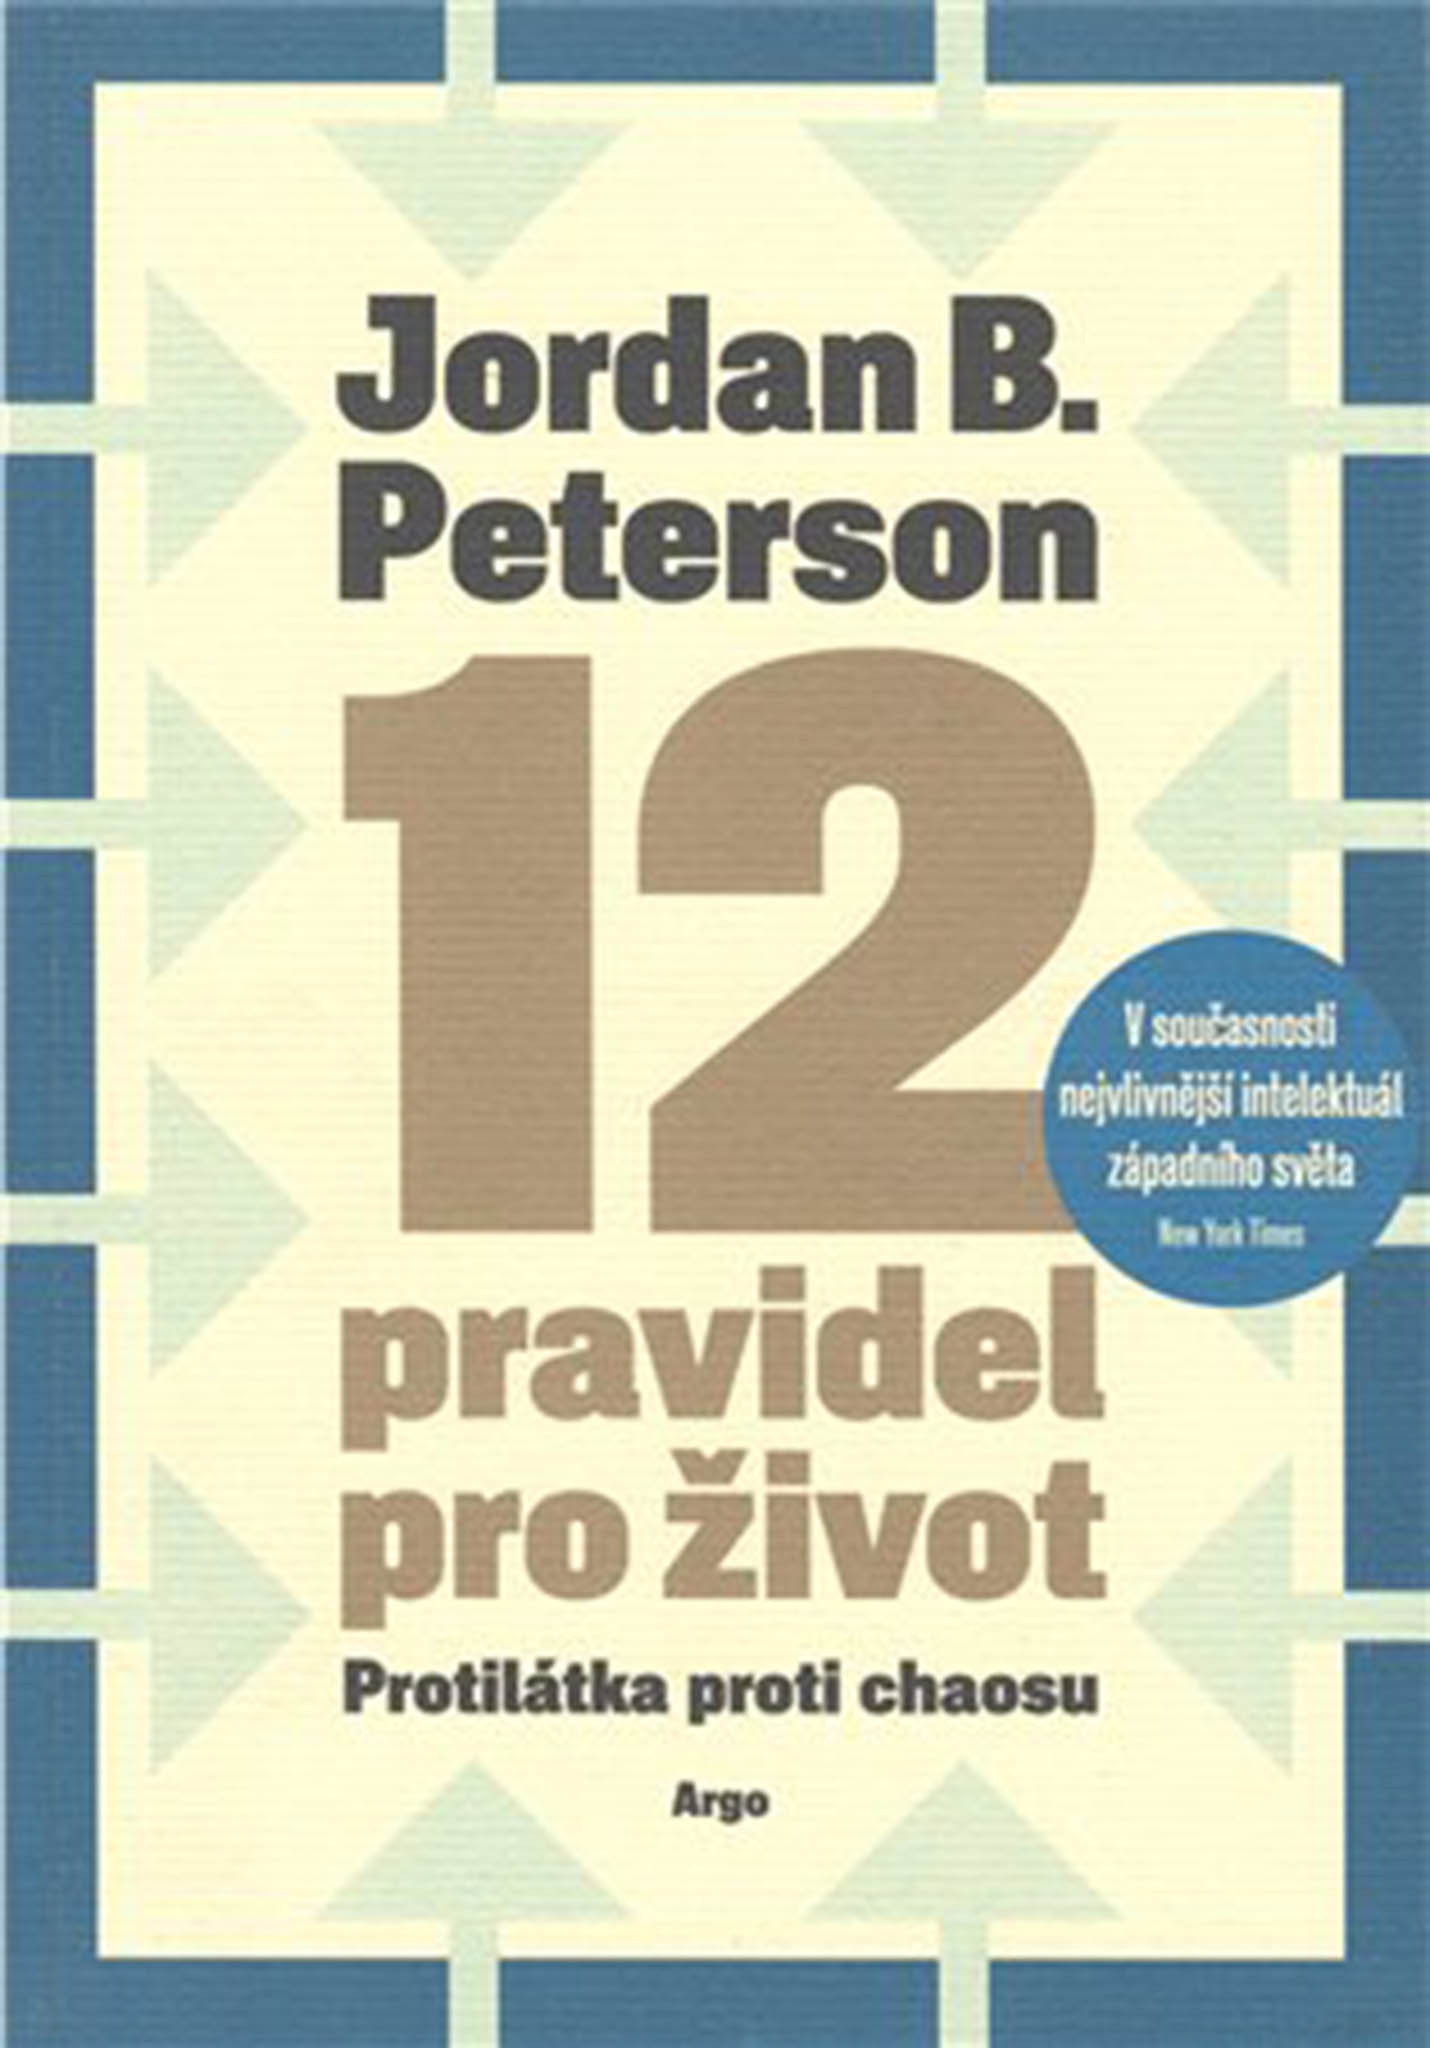 Jordan B. Peterson: 12 pravidel pro ivot – Protiltka proti chaosu, Argo, 2019